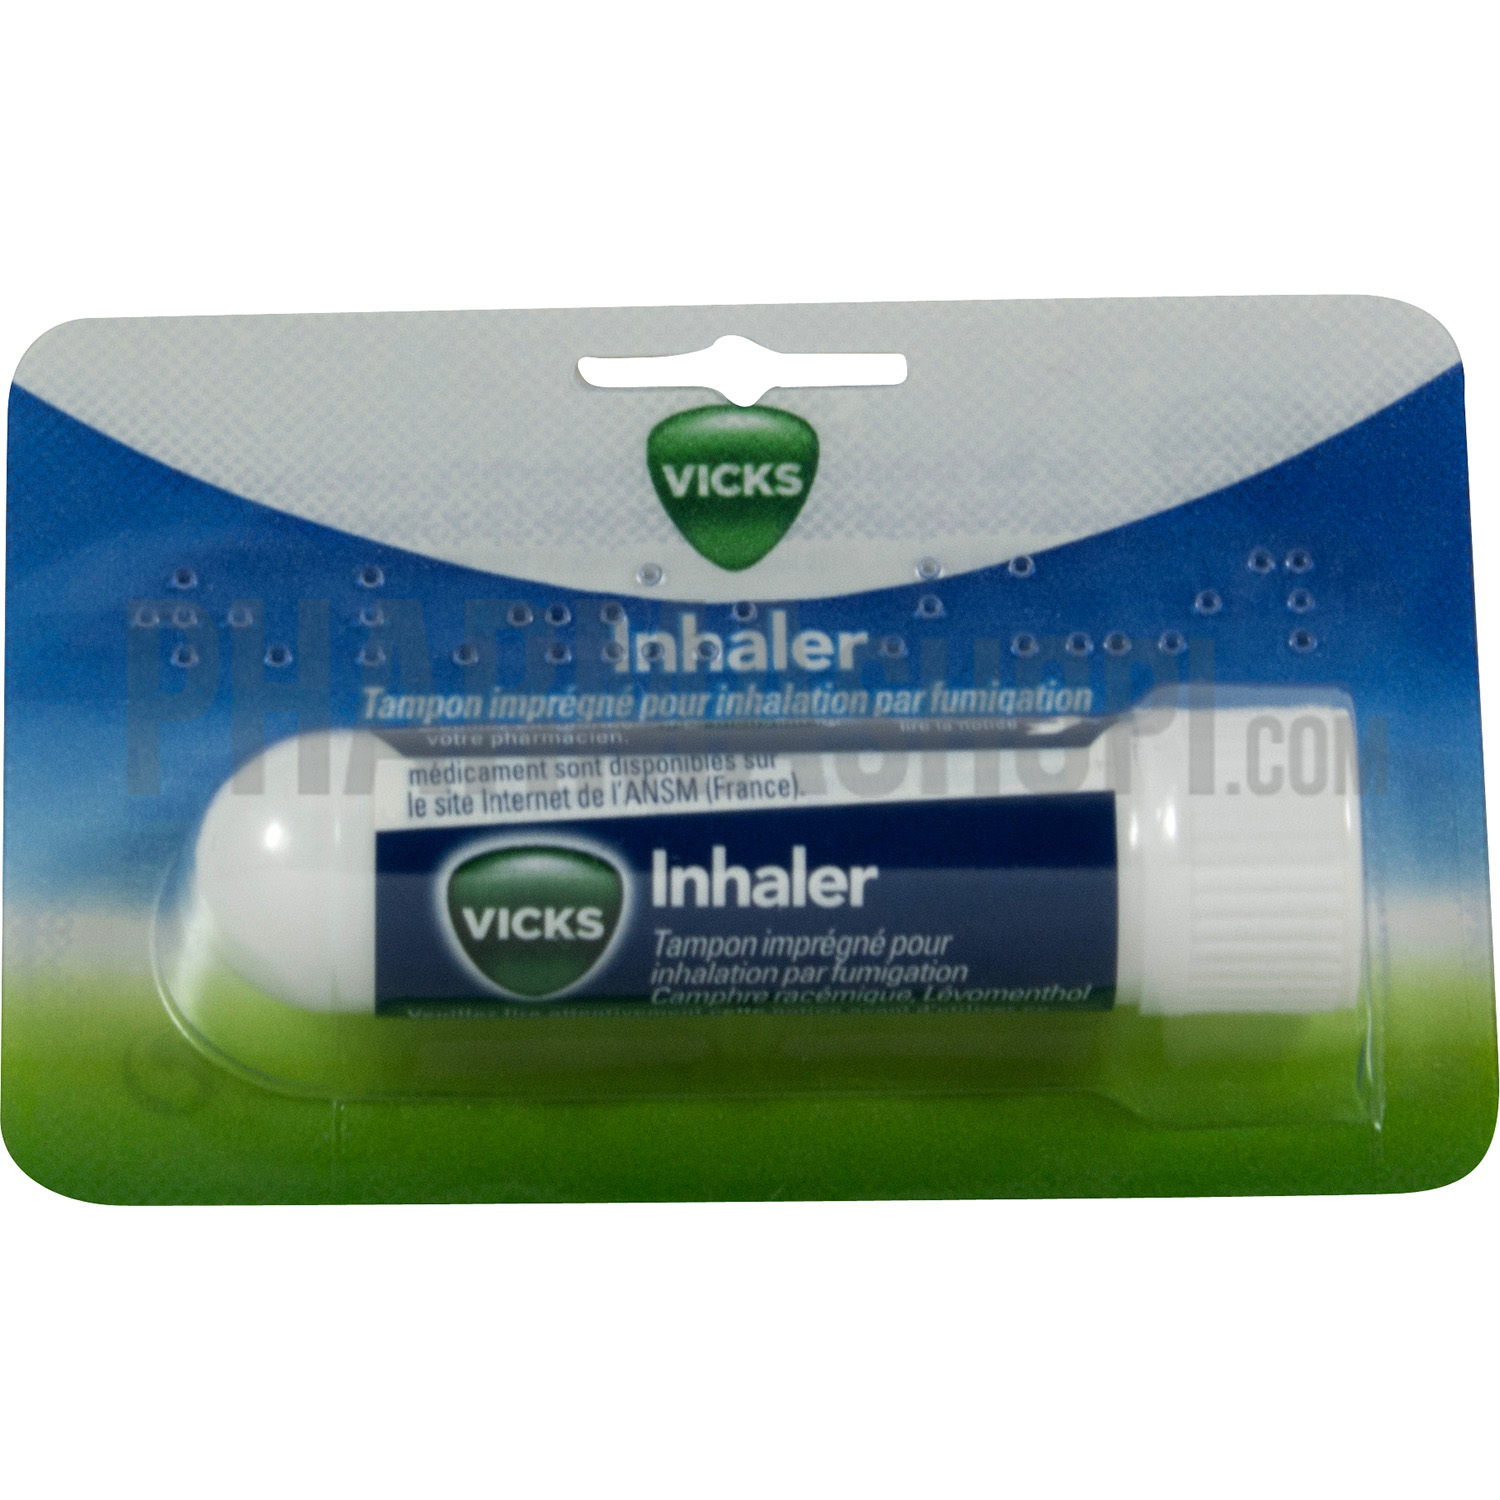 Vicks inhaler tampon imprégné pour inhalation par fumigation - boîte de 1 tampon